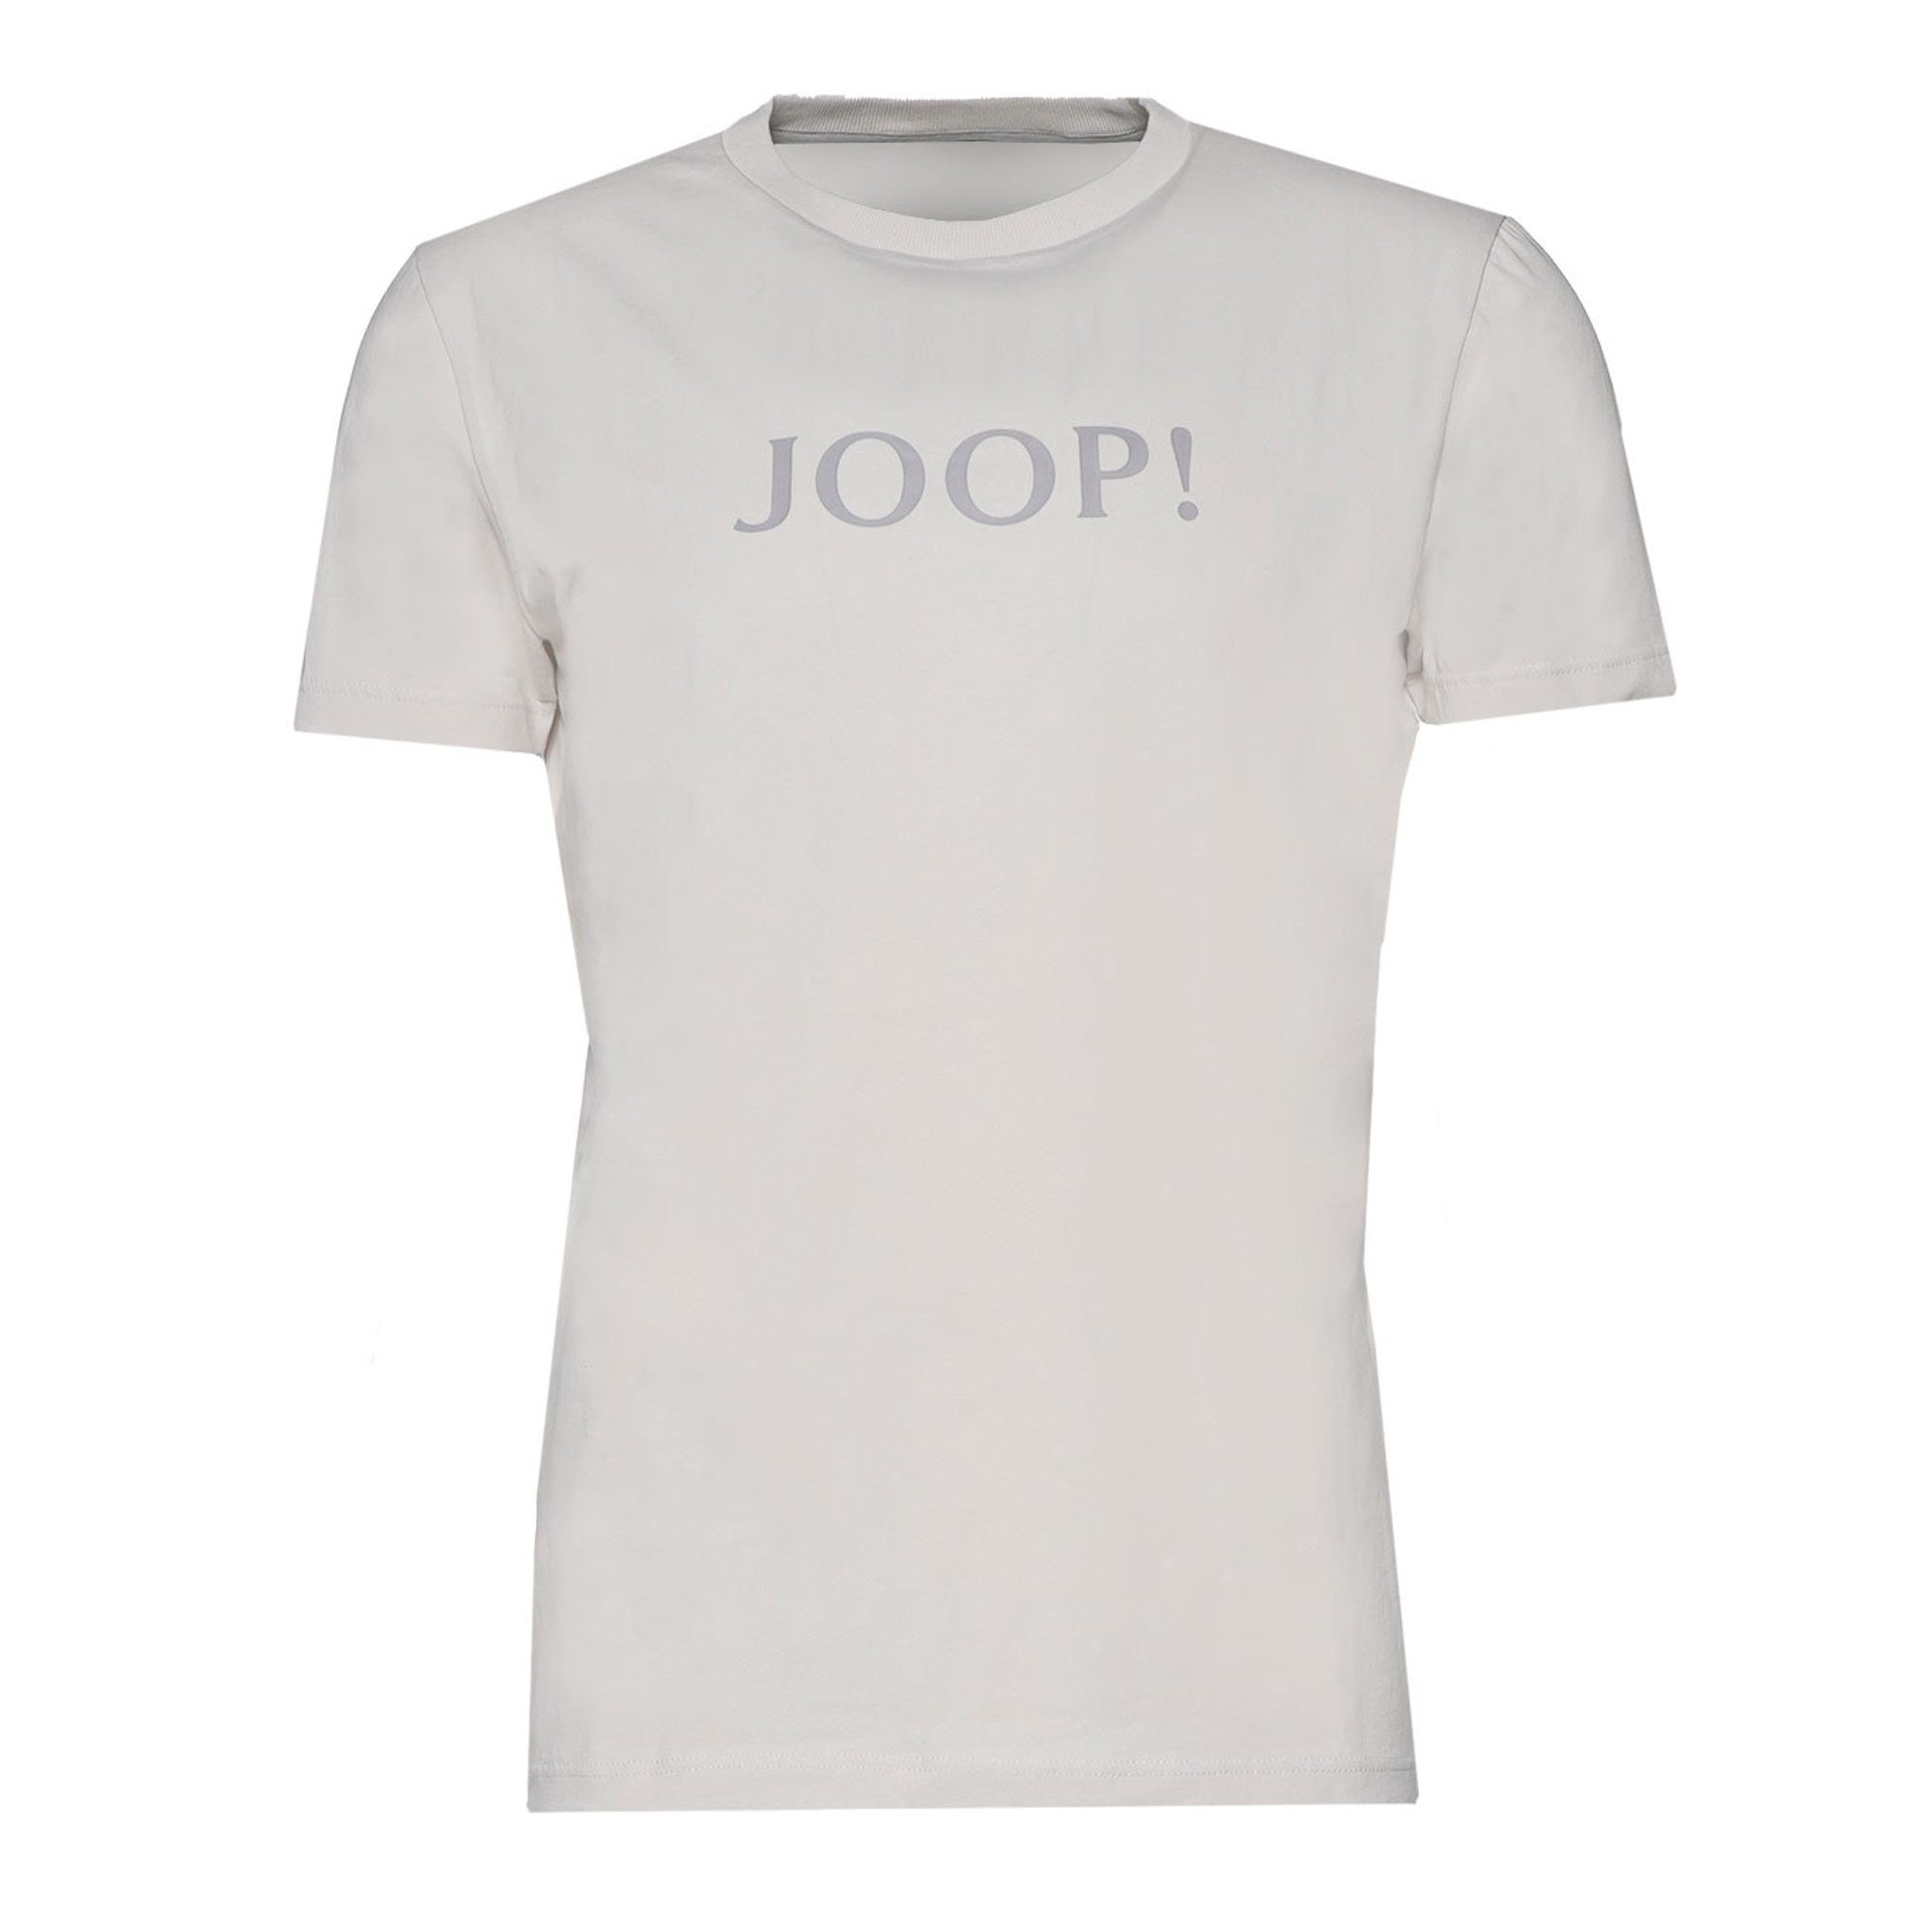 Joop! T-Shirt Herren T-Shirt - Loungewear, Rundhals, Halbarm Hellgrau